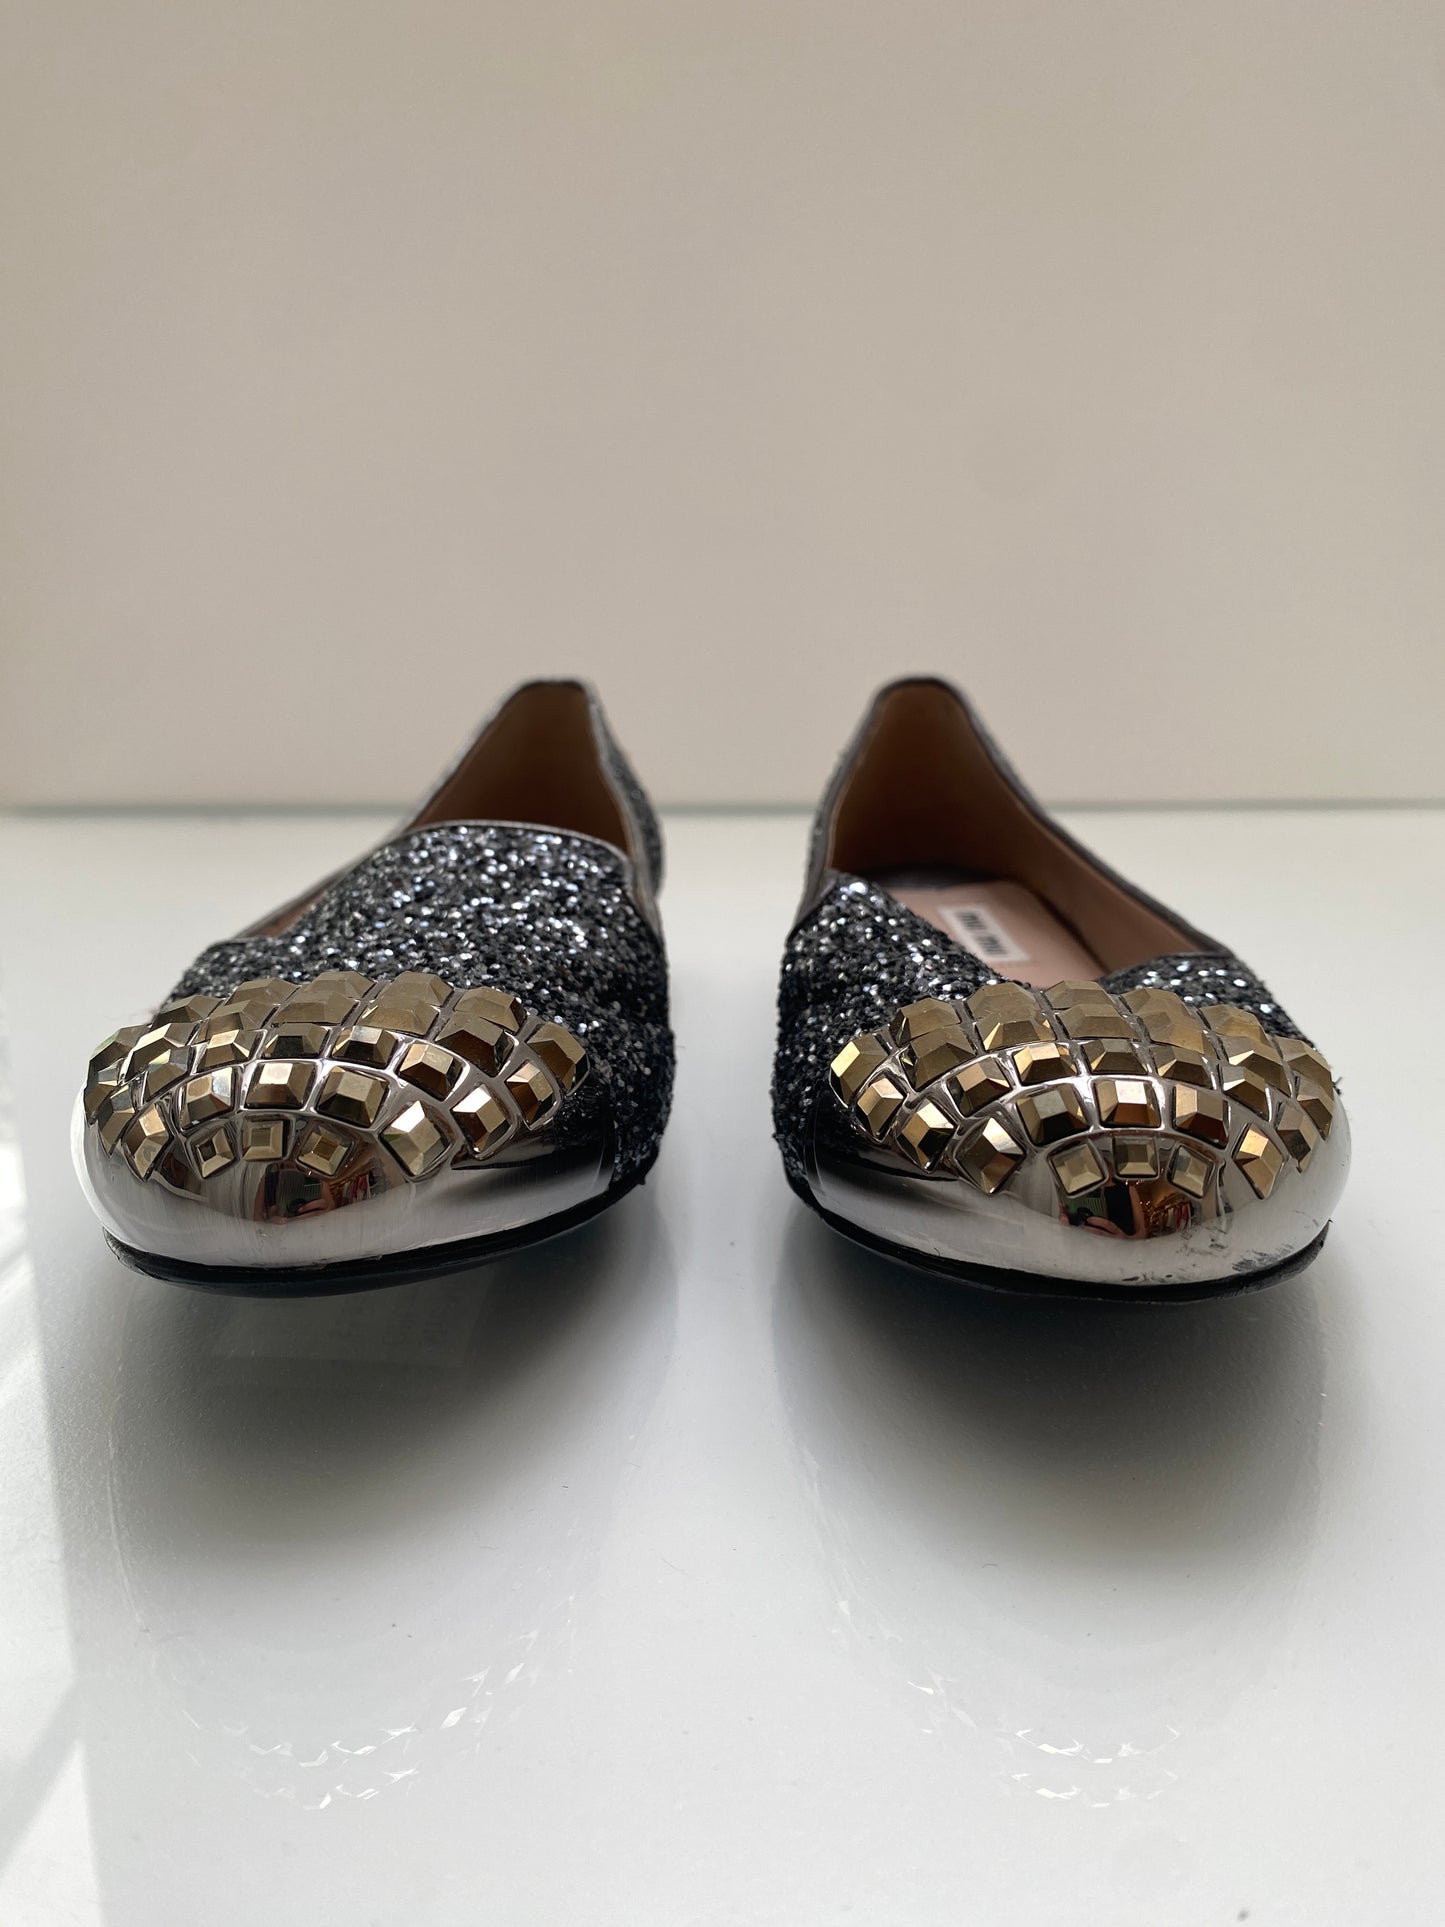 Miu Miu Silver Glitter & Gold Toe Flats, 38